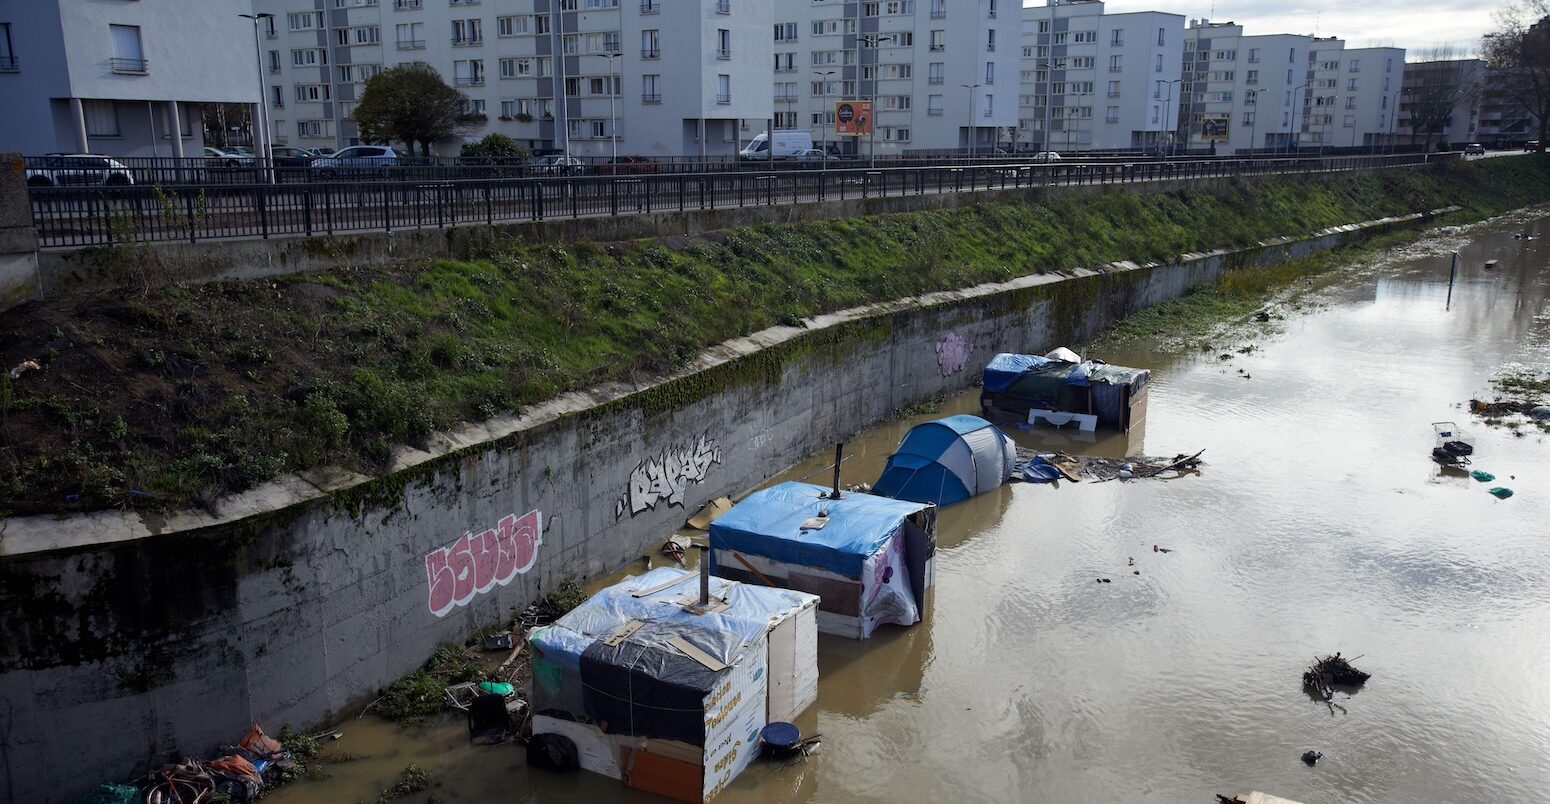 Flooded slums on the Garonne river banks